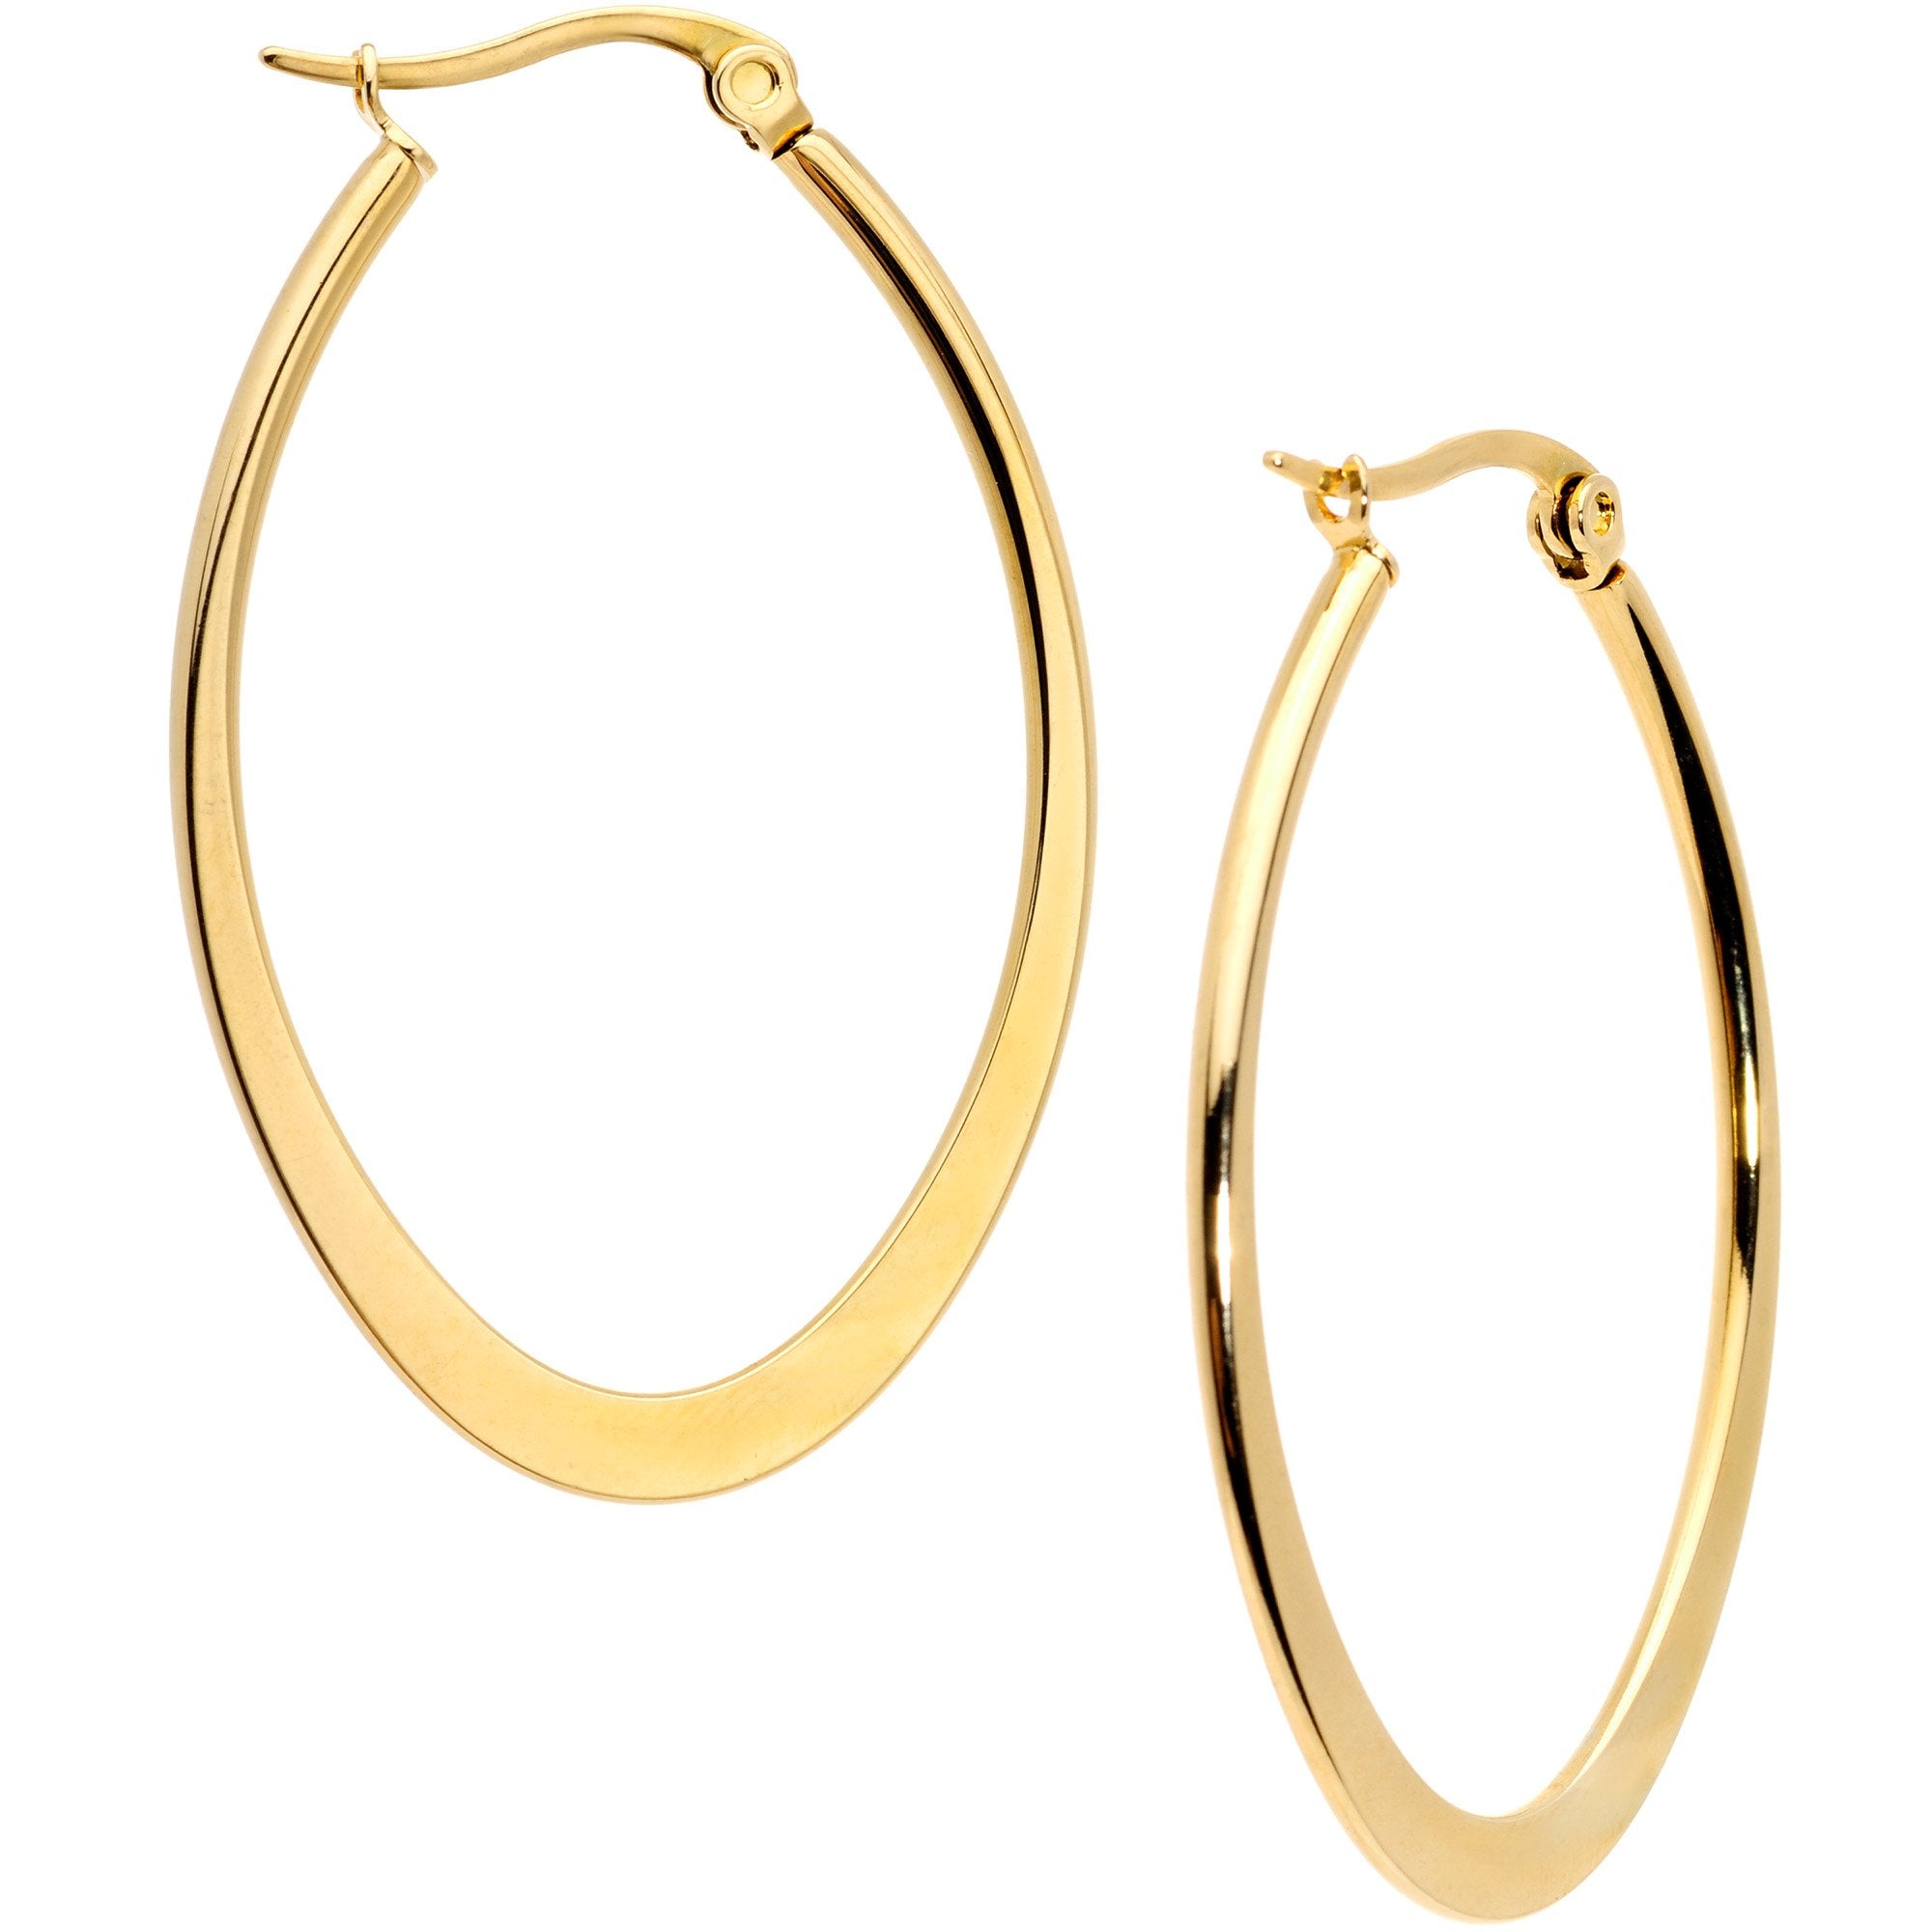 40mm Gold Tone PVD Stainless Steel Oval Hoop Earrings